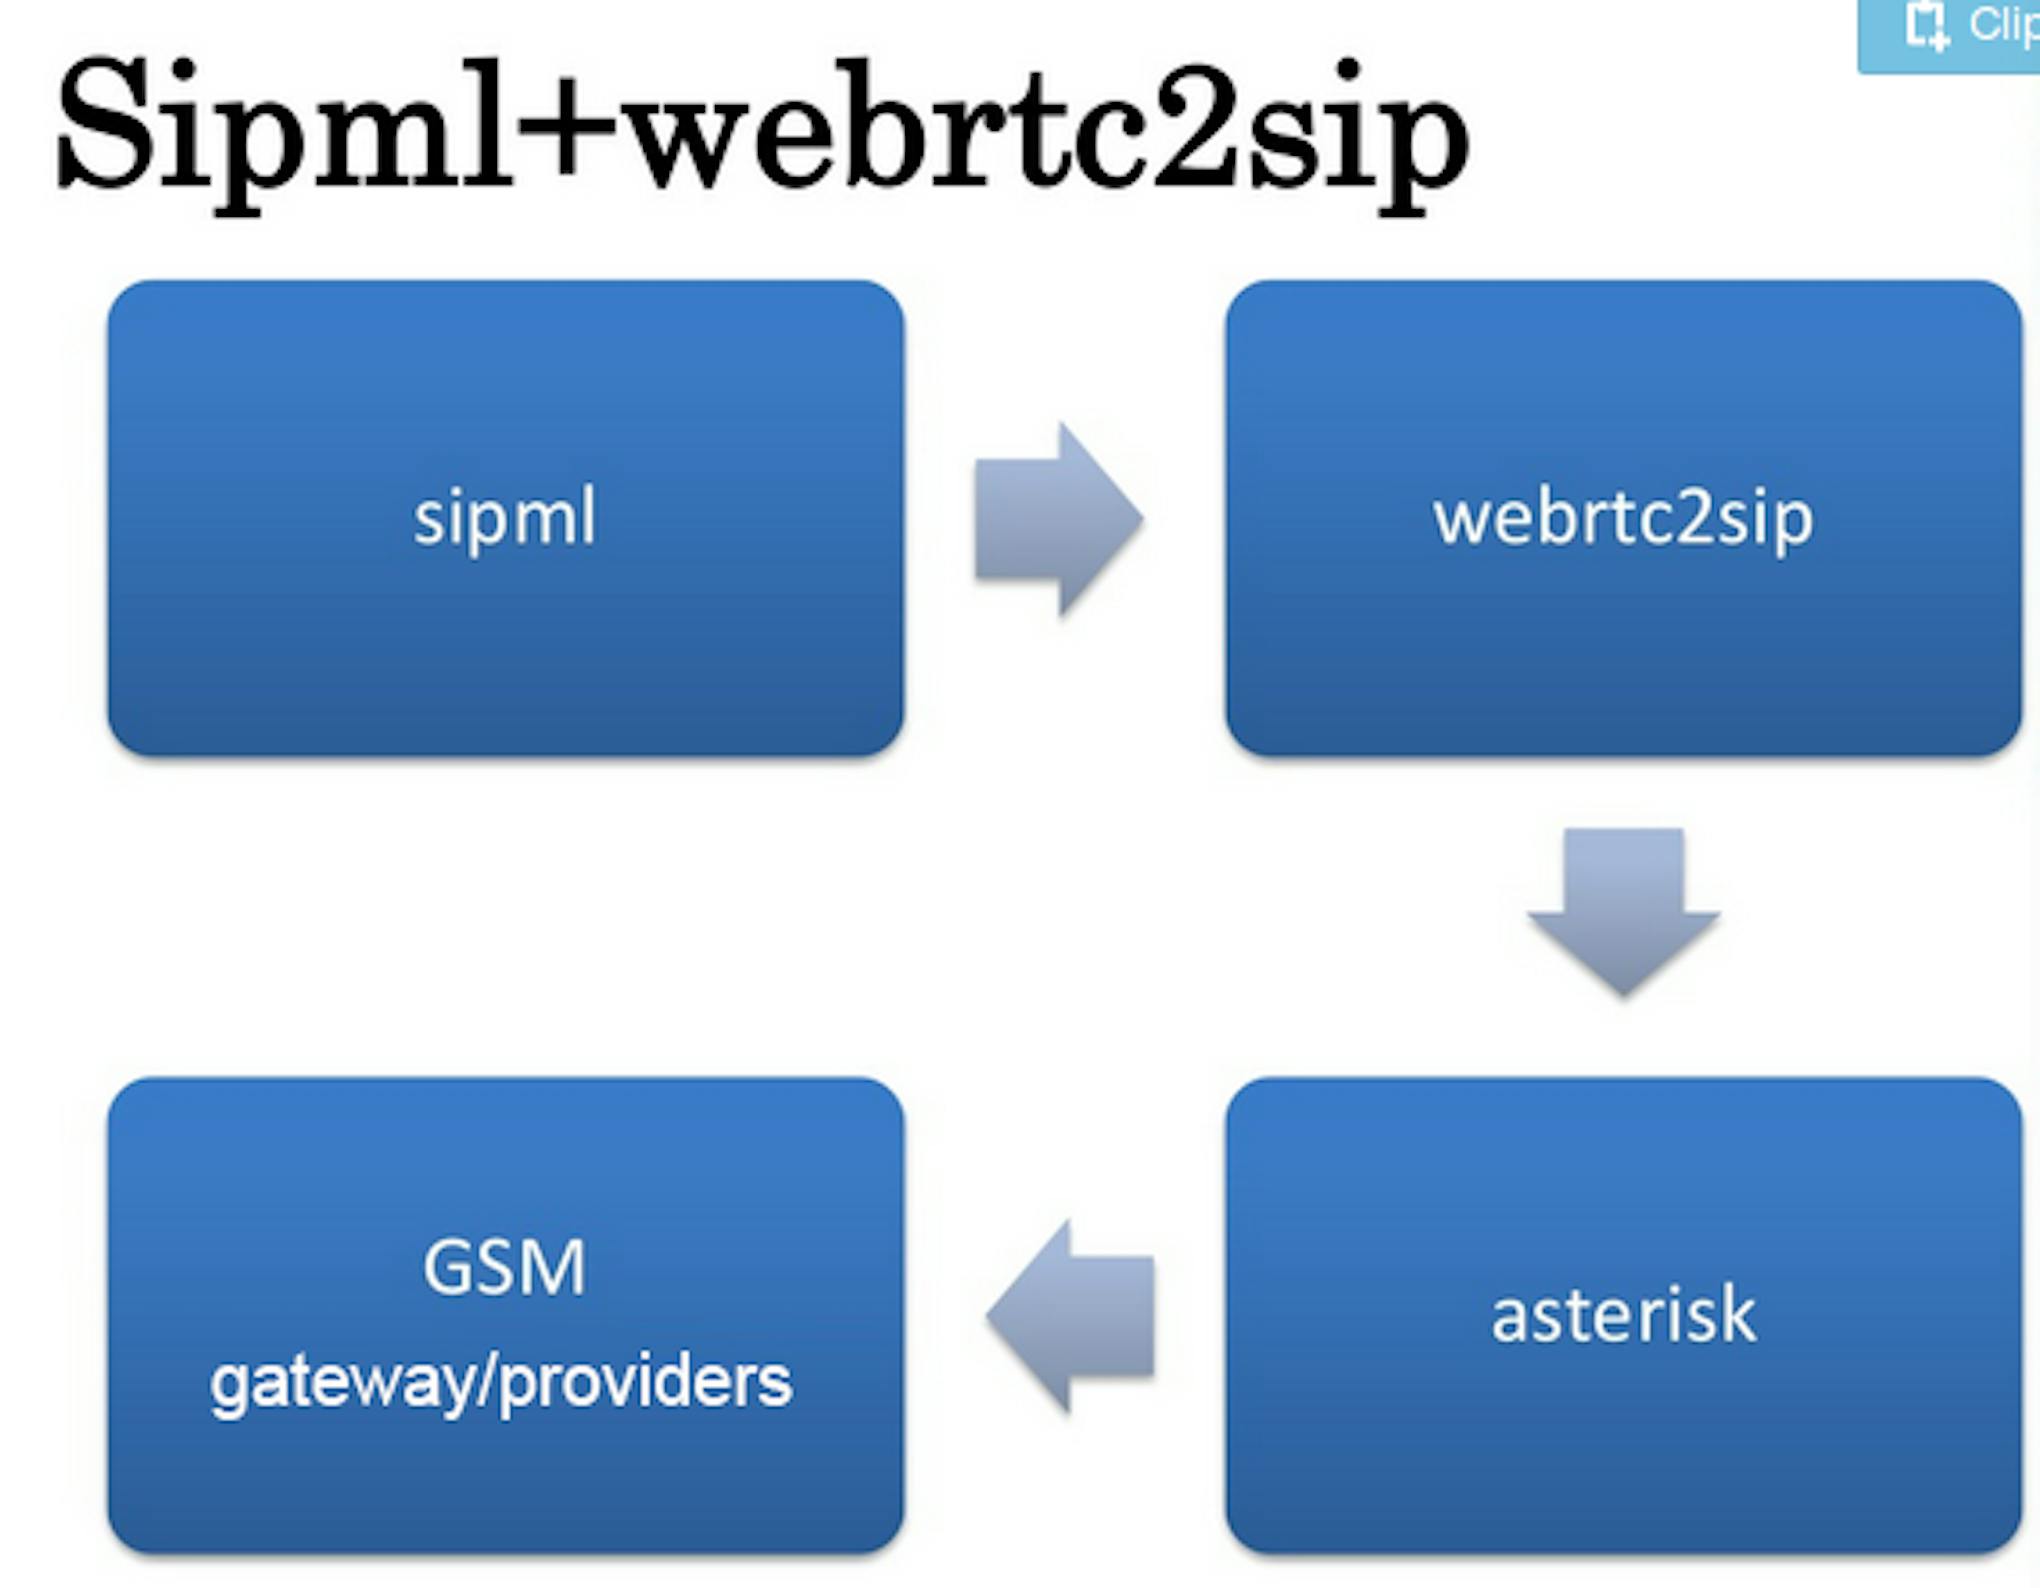 Sipml+webrtc2sip.